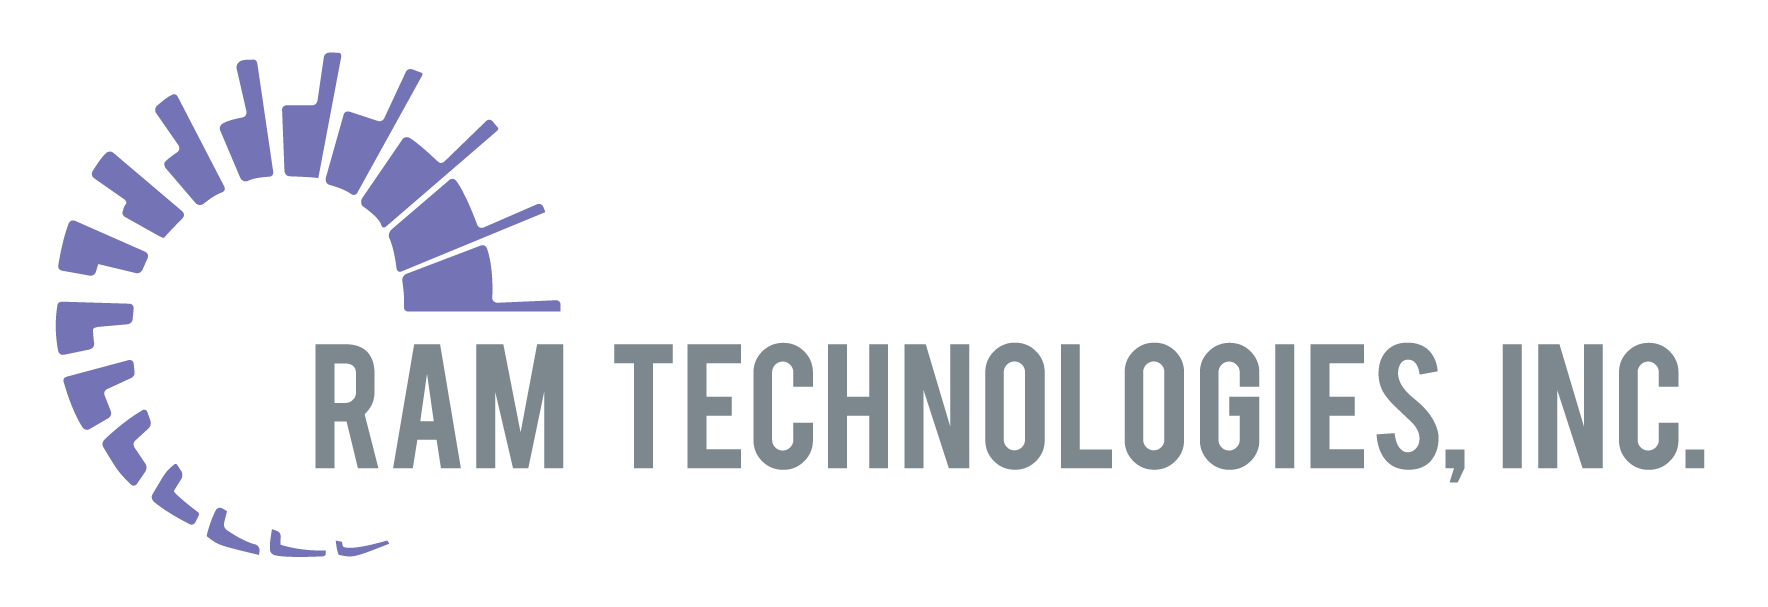 RAM Technologies, Inc.